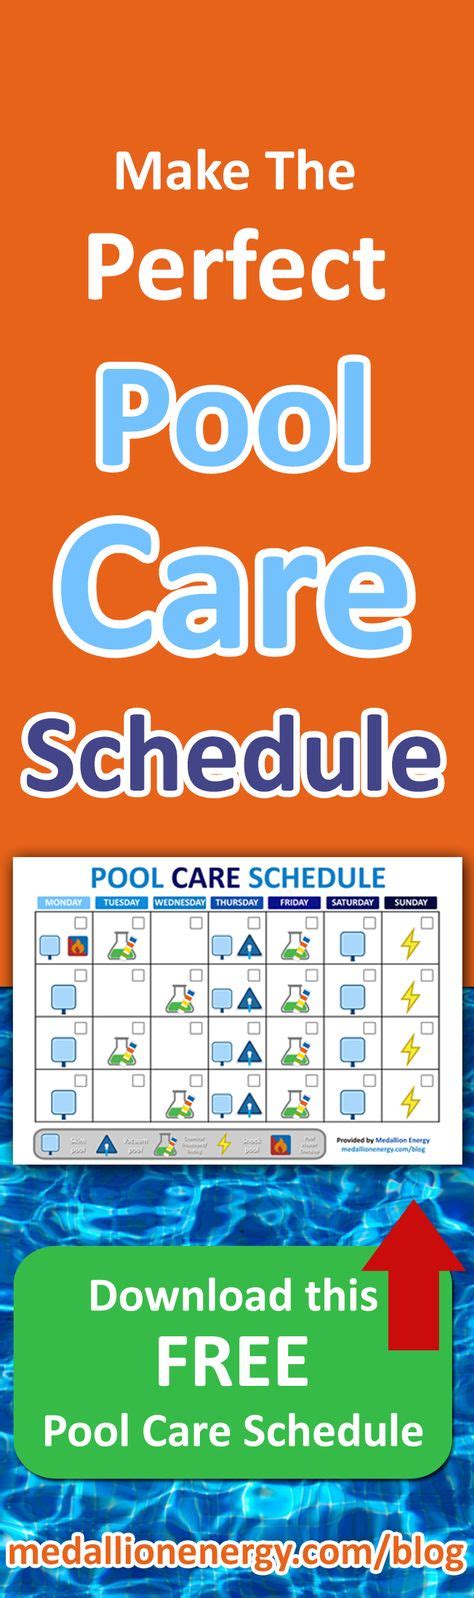 pool maintenance    easy   pool care schedule